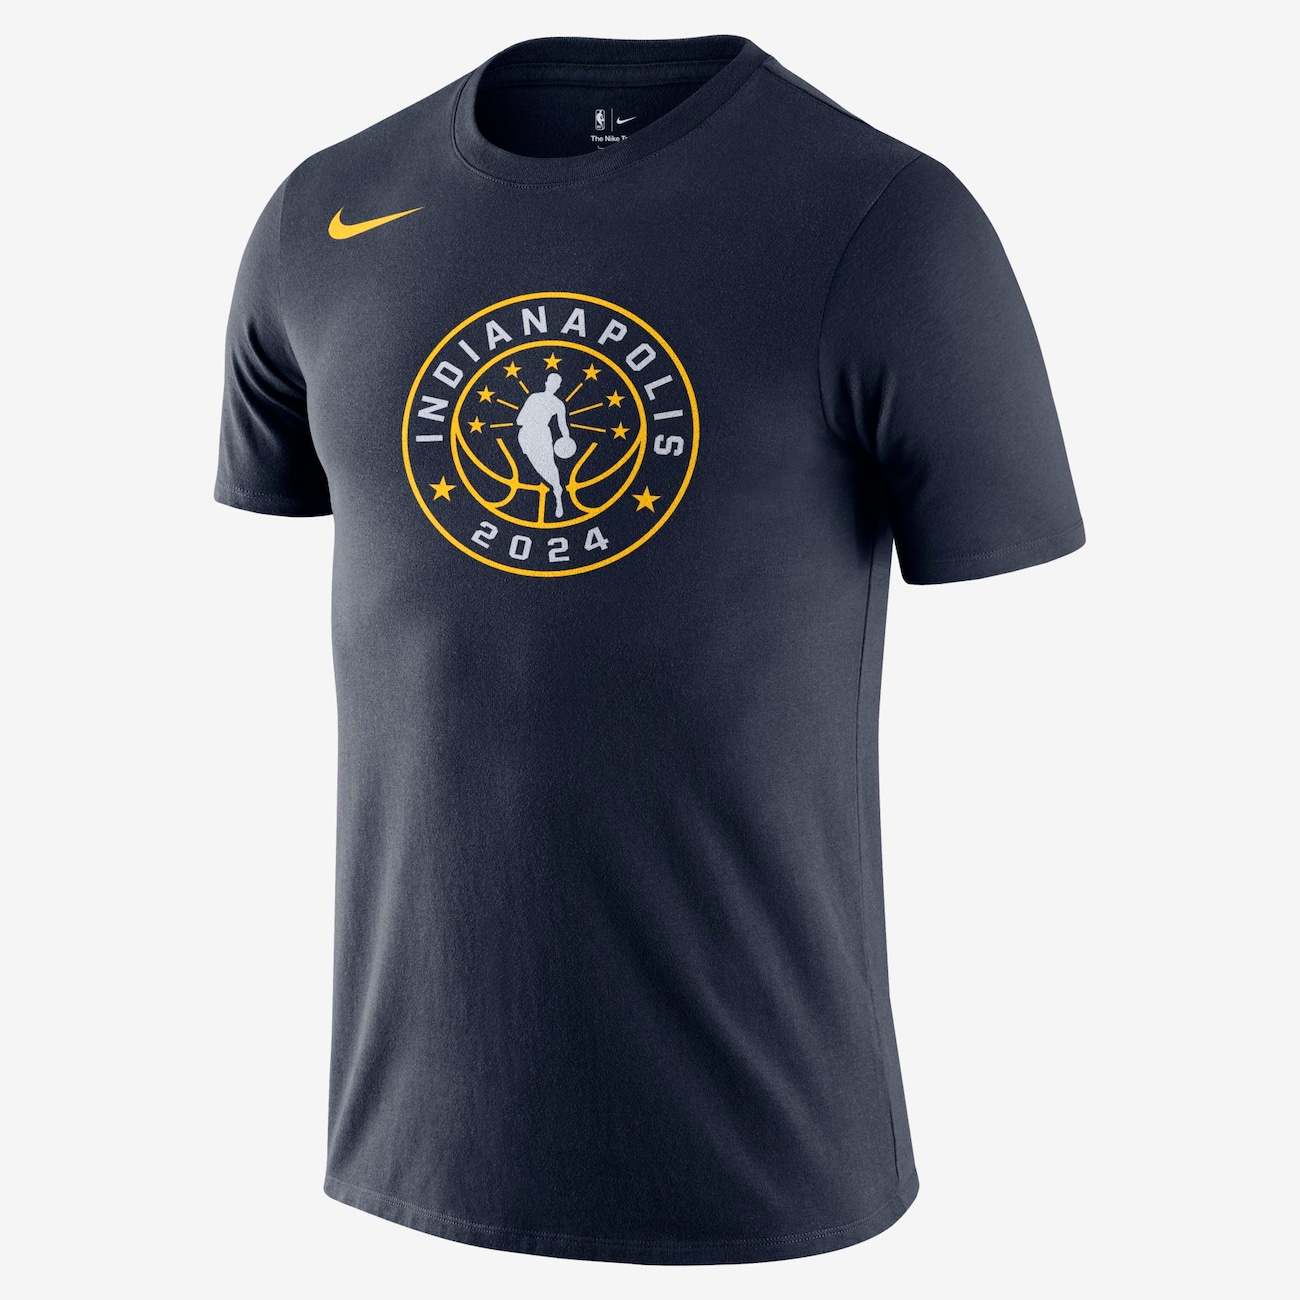 Camiseta Nike Nba M Nk Es N31 Ss Tee - masculino - azul marinho+dourado,  Nike, Casuais, AZM/DOU